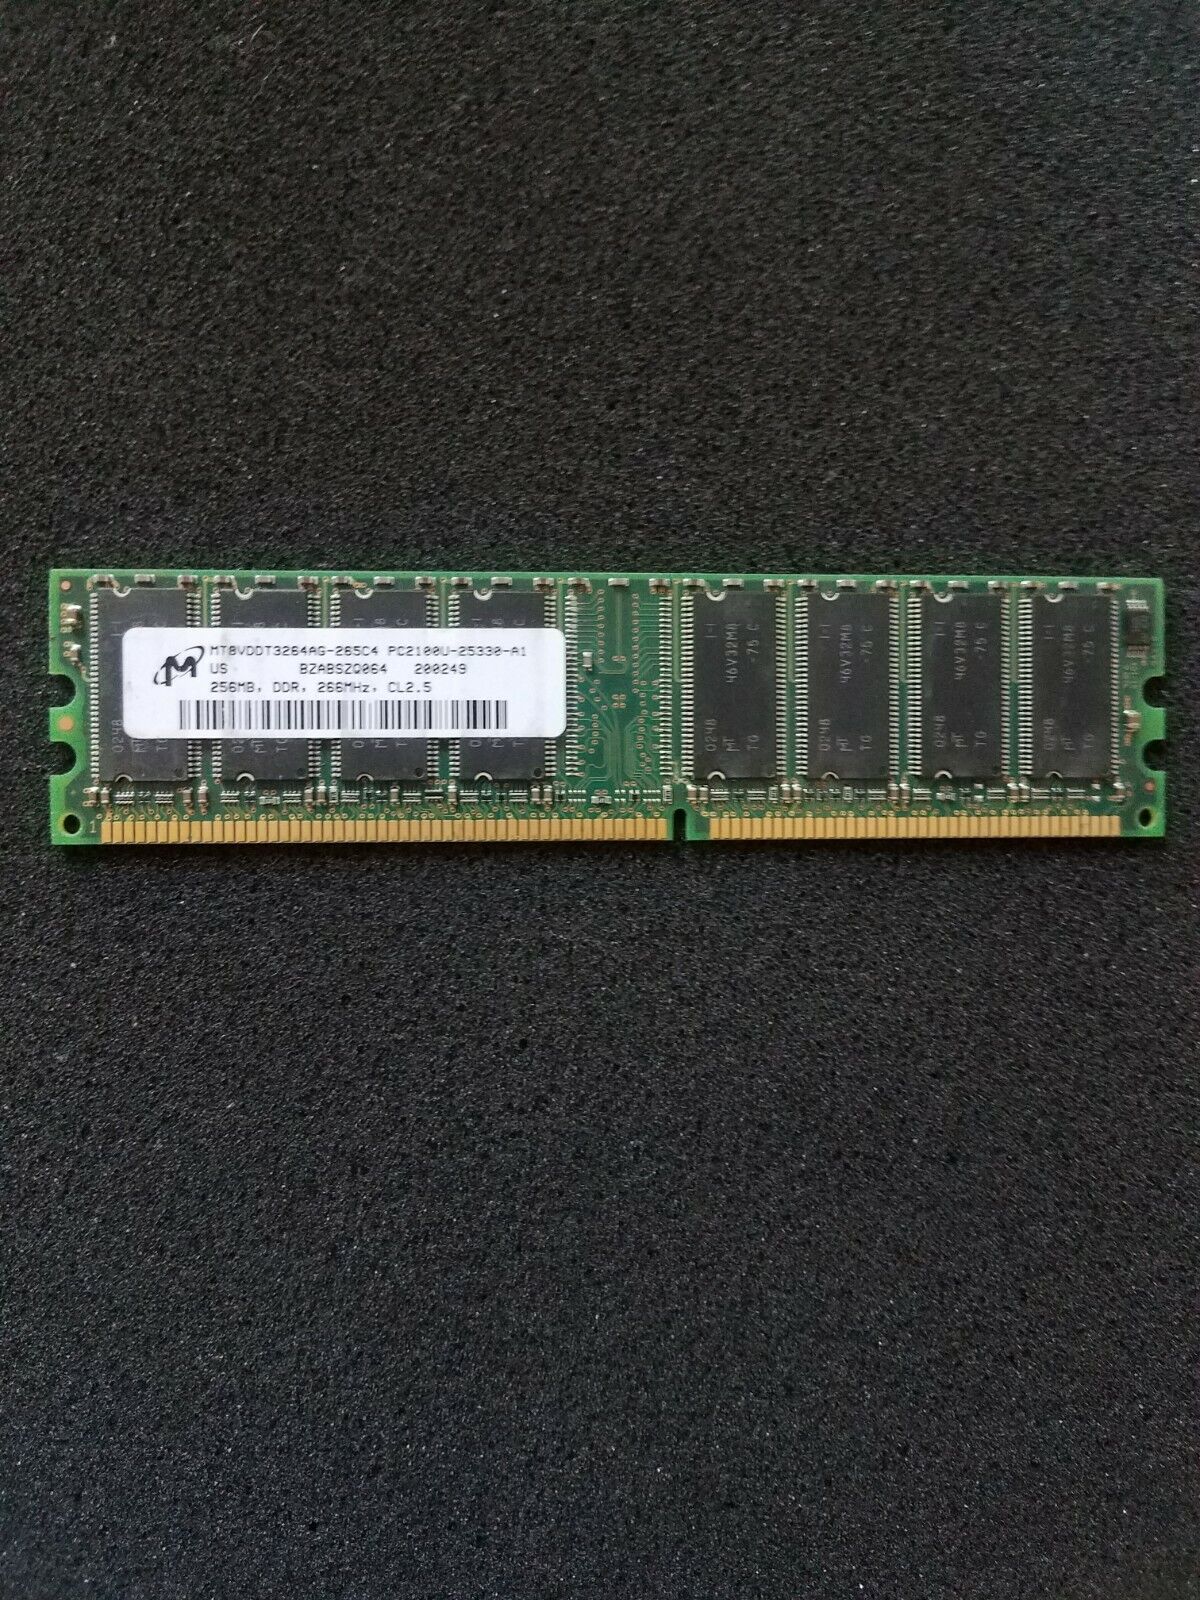 Micron 256MB , PC-2100 , DDR , 184 Pin , Model # MT8VDDT3264AG-265C4